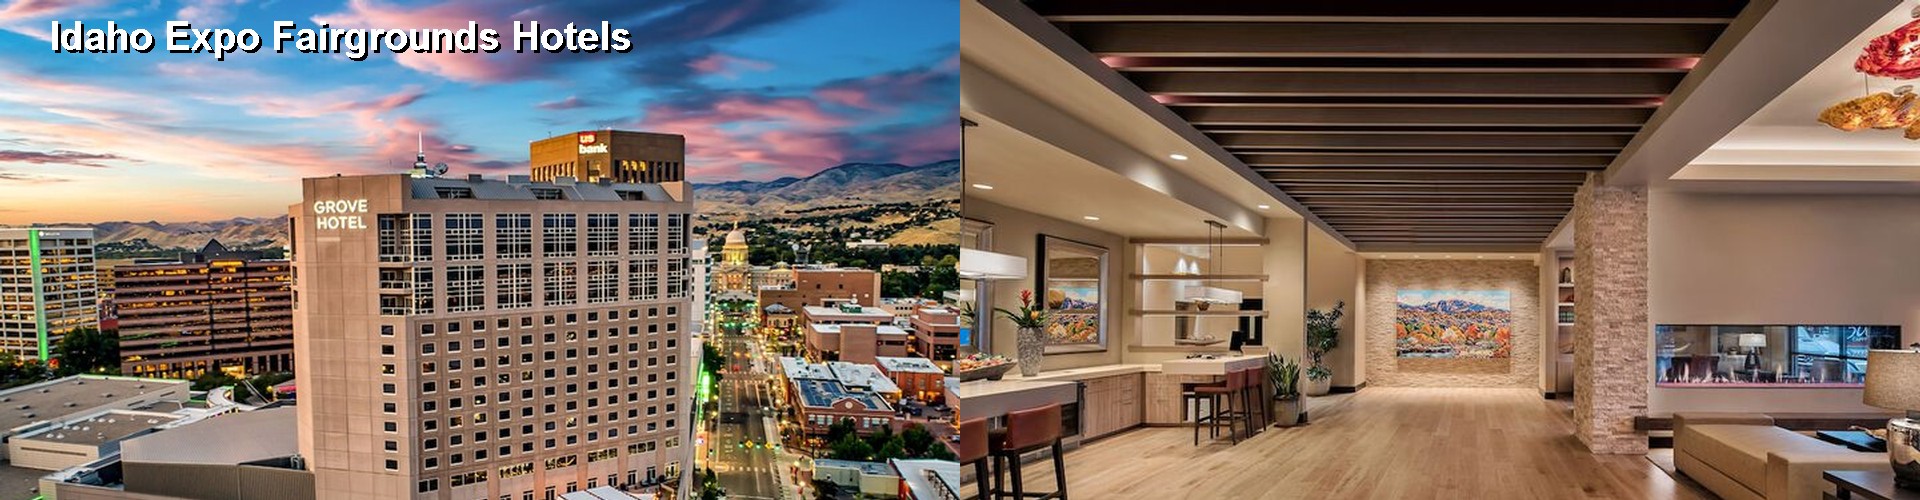 5 Best Hotels near Idaho Expo Fairgrounds